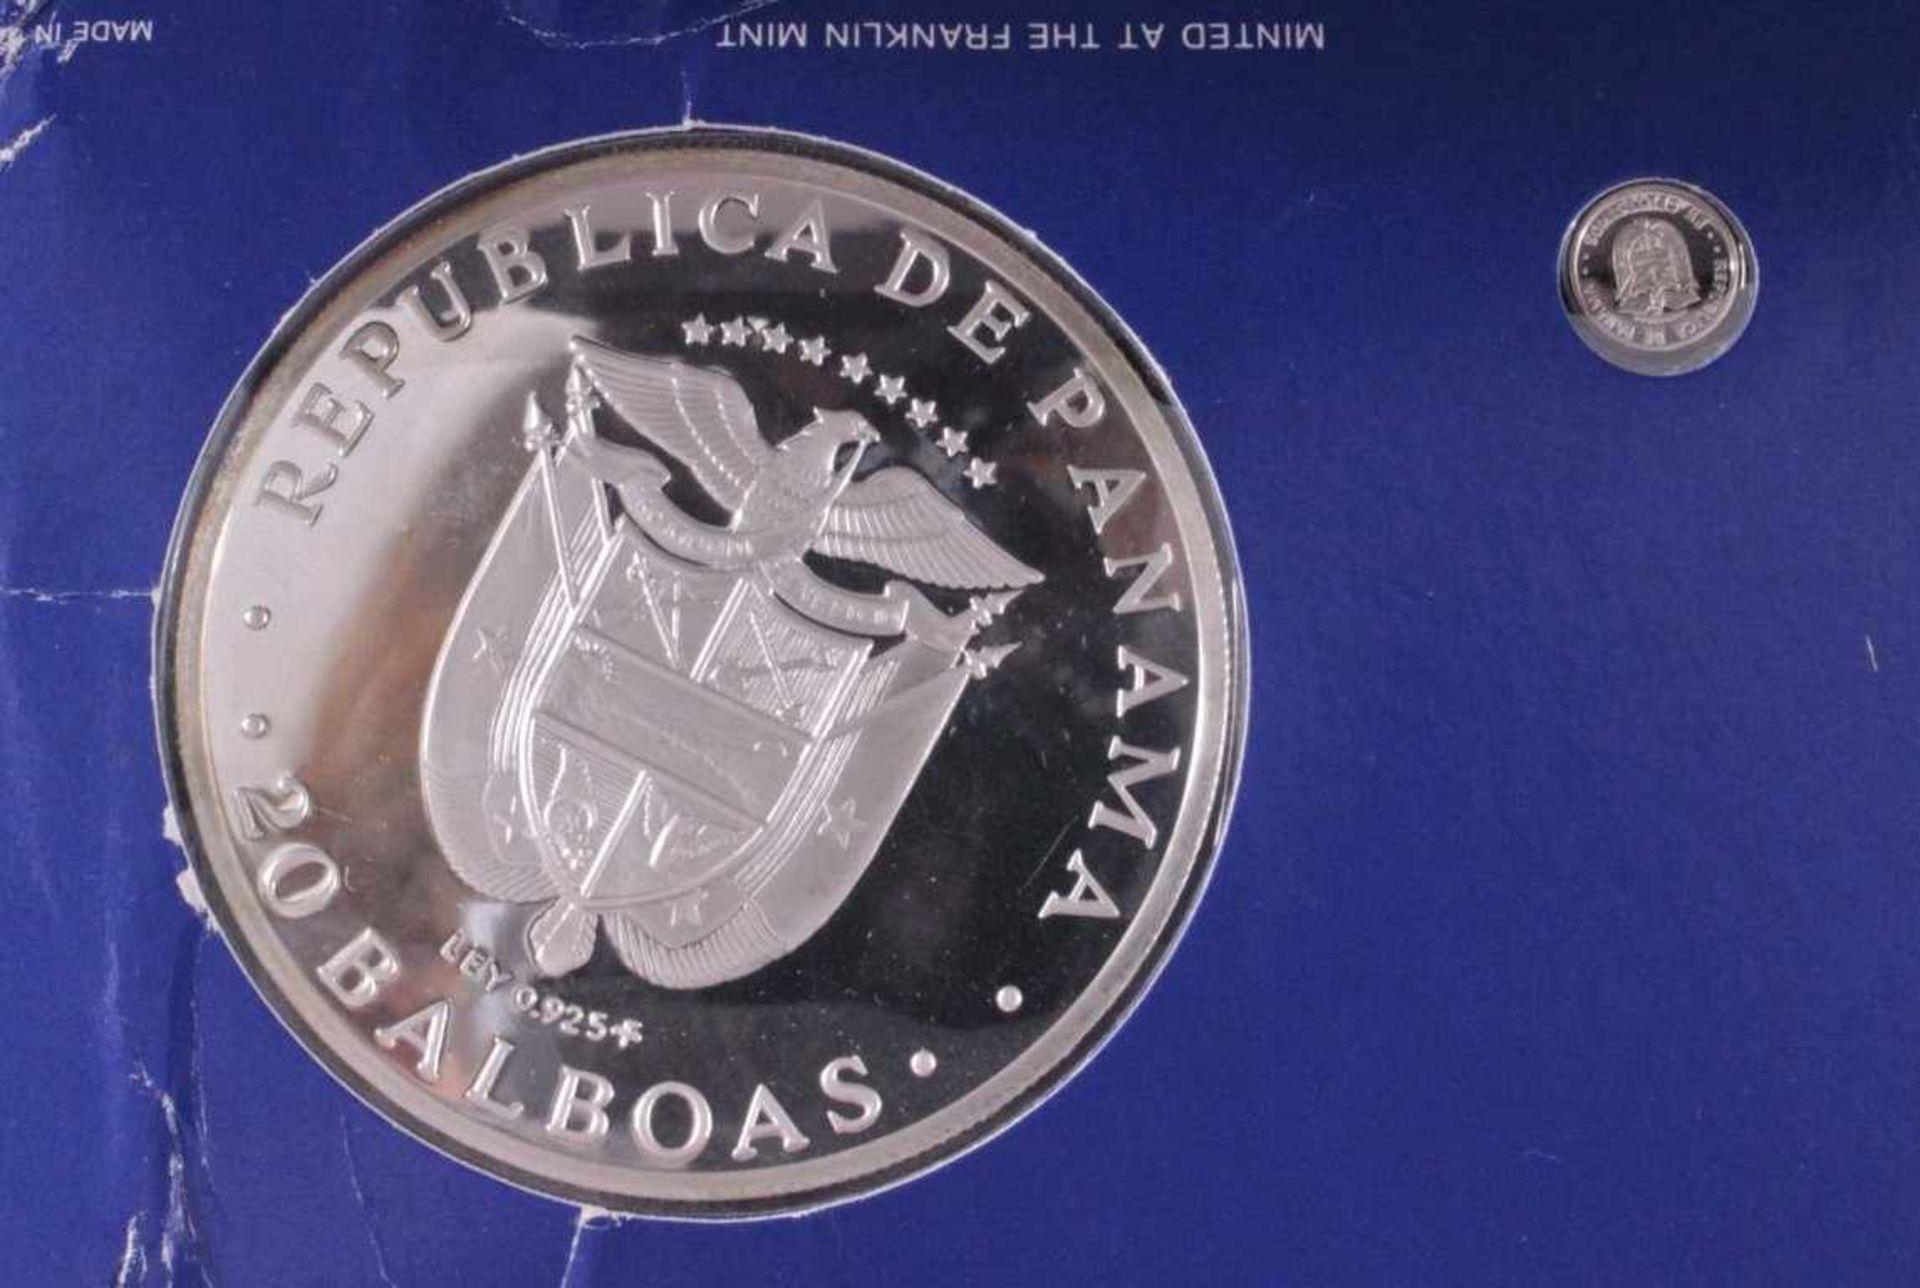 Panama 20 Balboas, 1976925er Sterling Silber Münze, Gewicht ca. 120 Gramm, in Etui,PP - Image 2 of 4